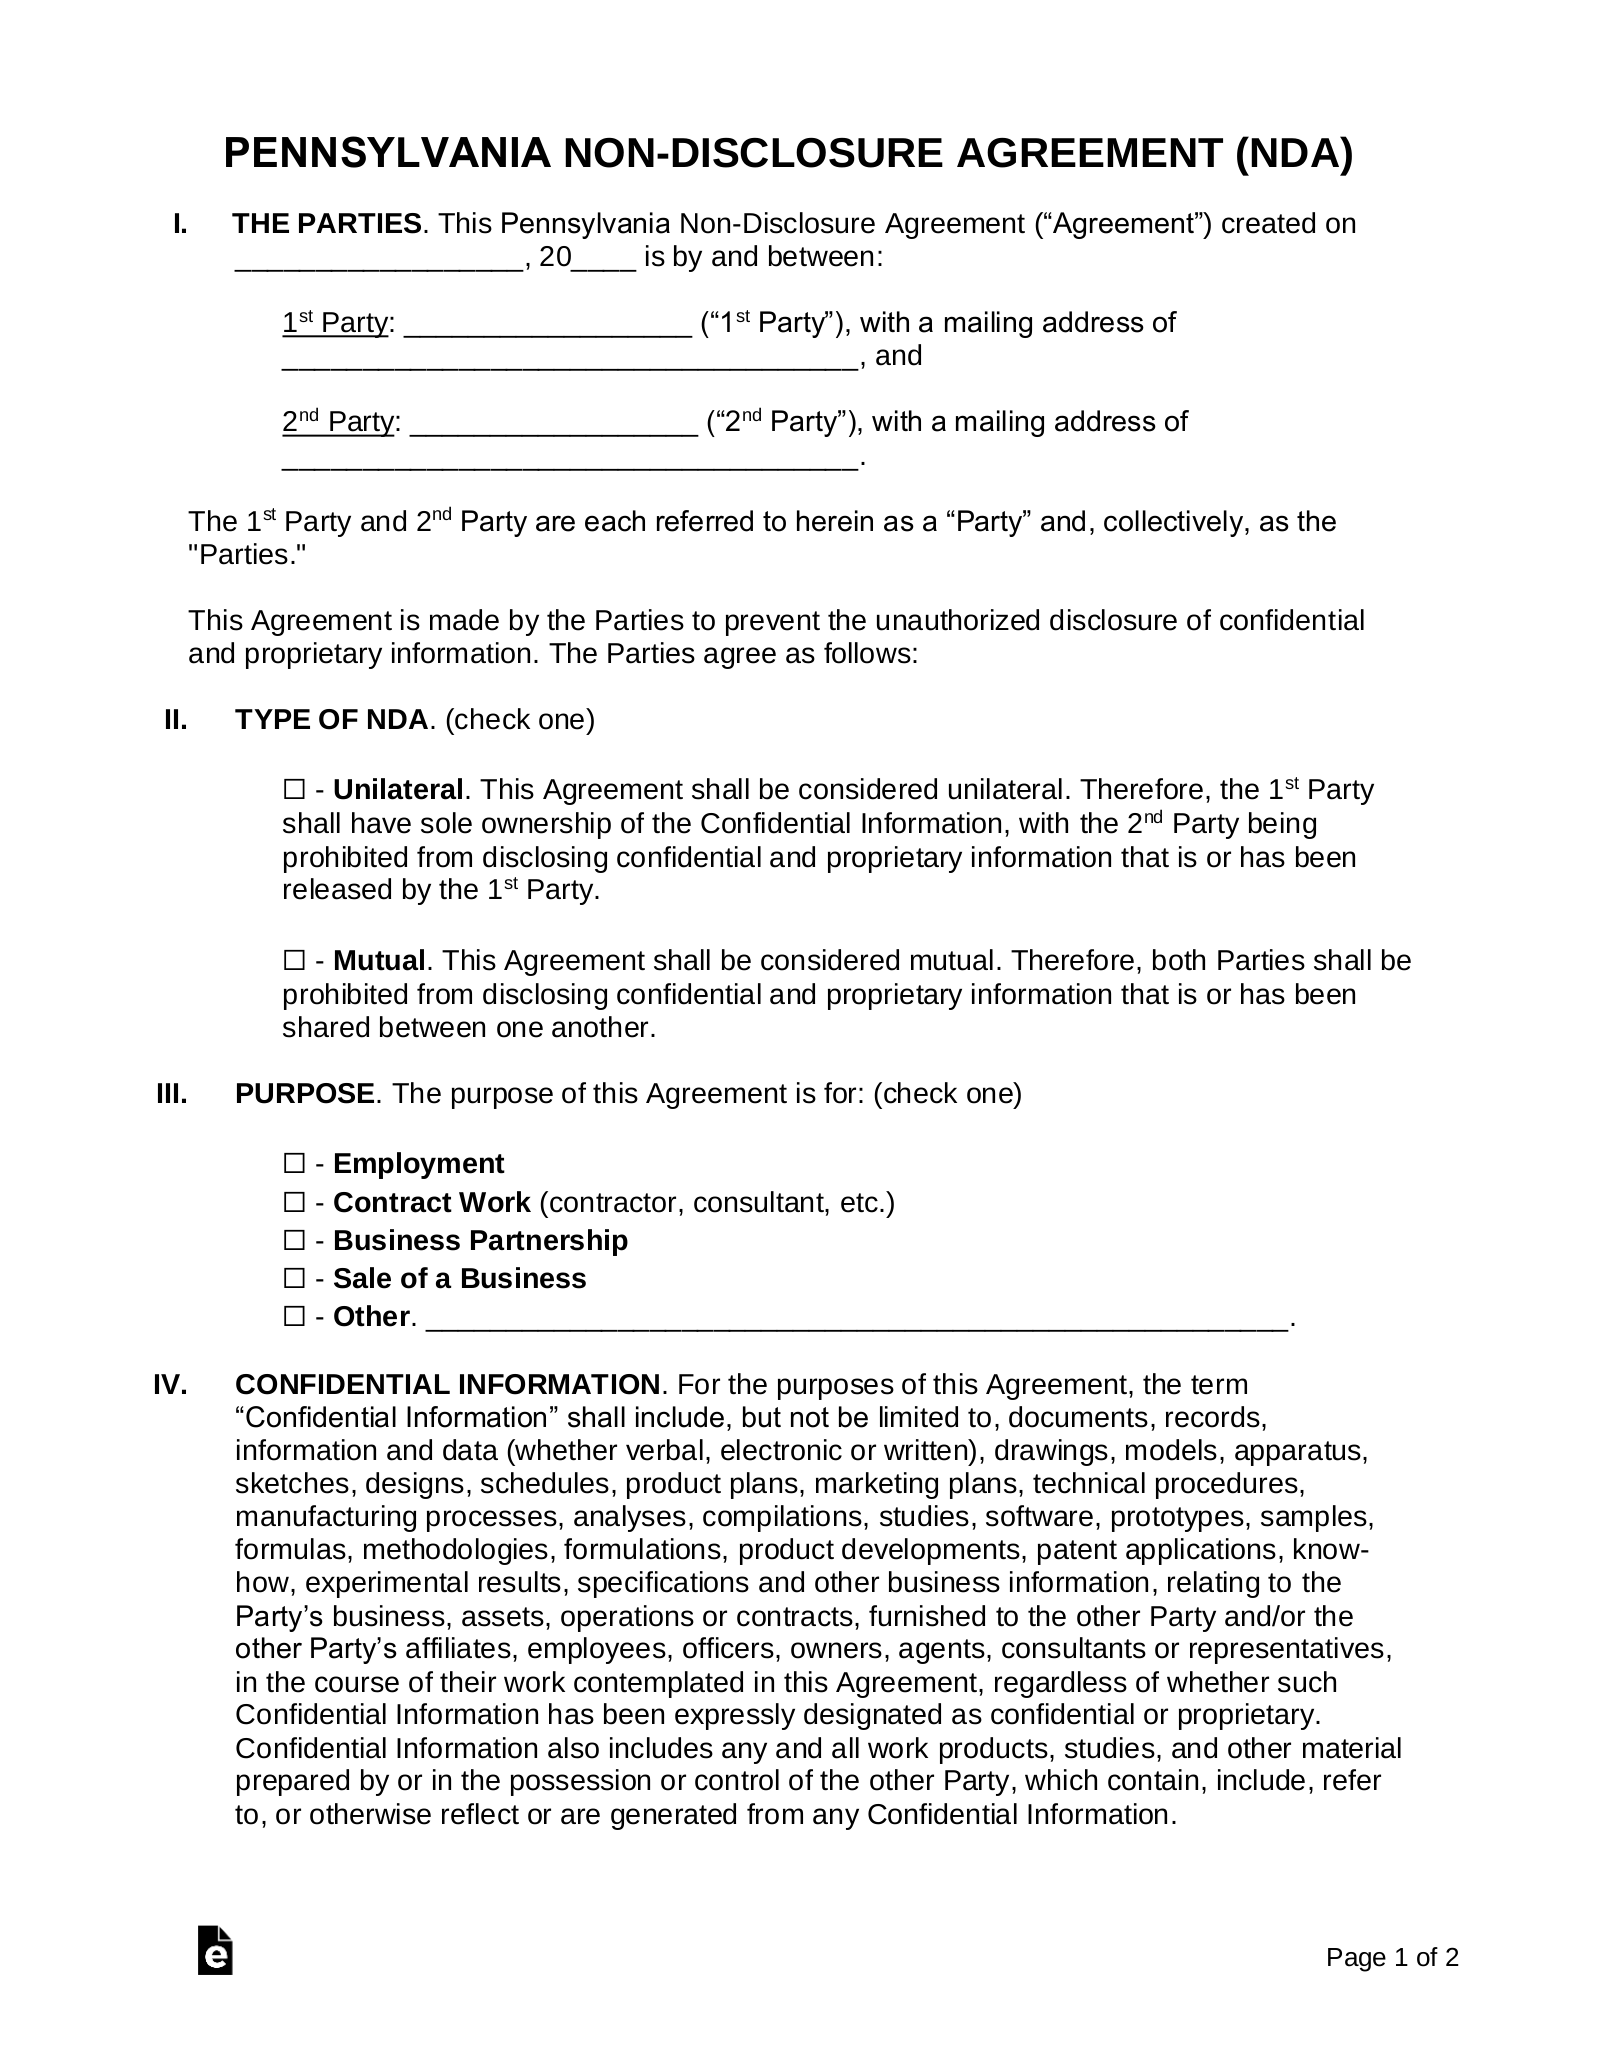 Pennsylvania Non-Disclosure Agreement (NDA) Template